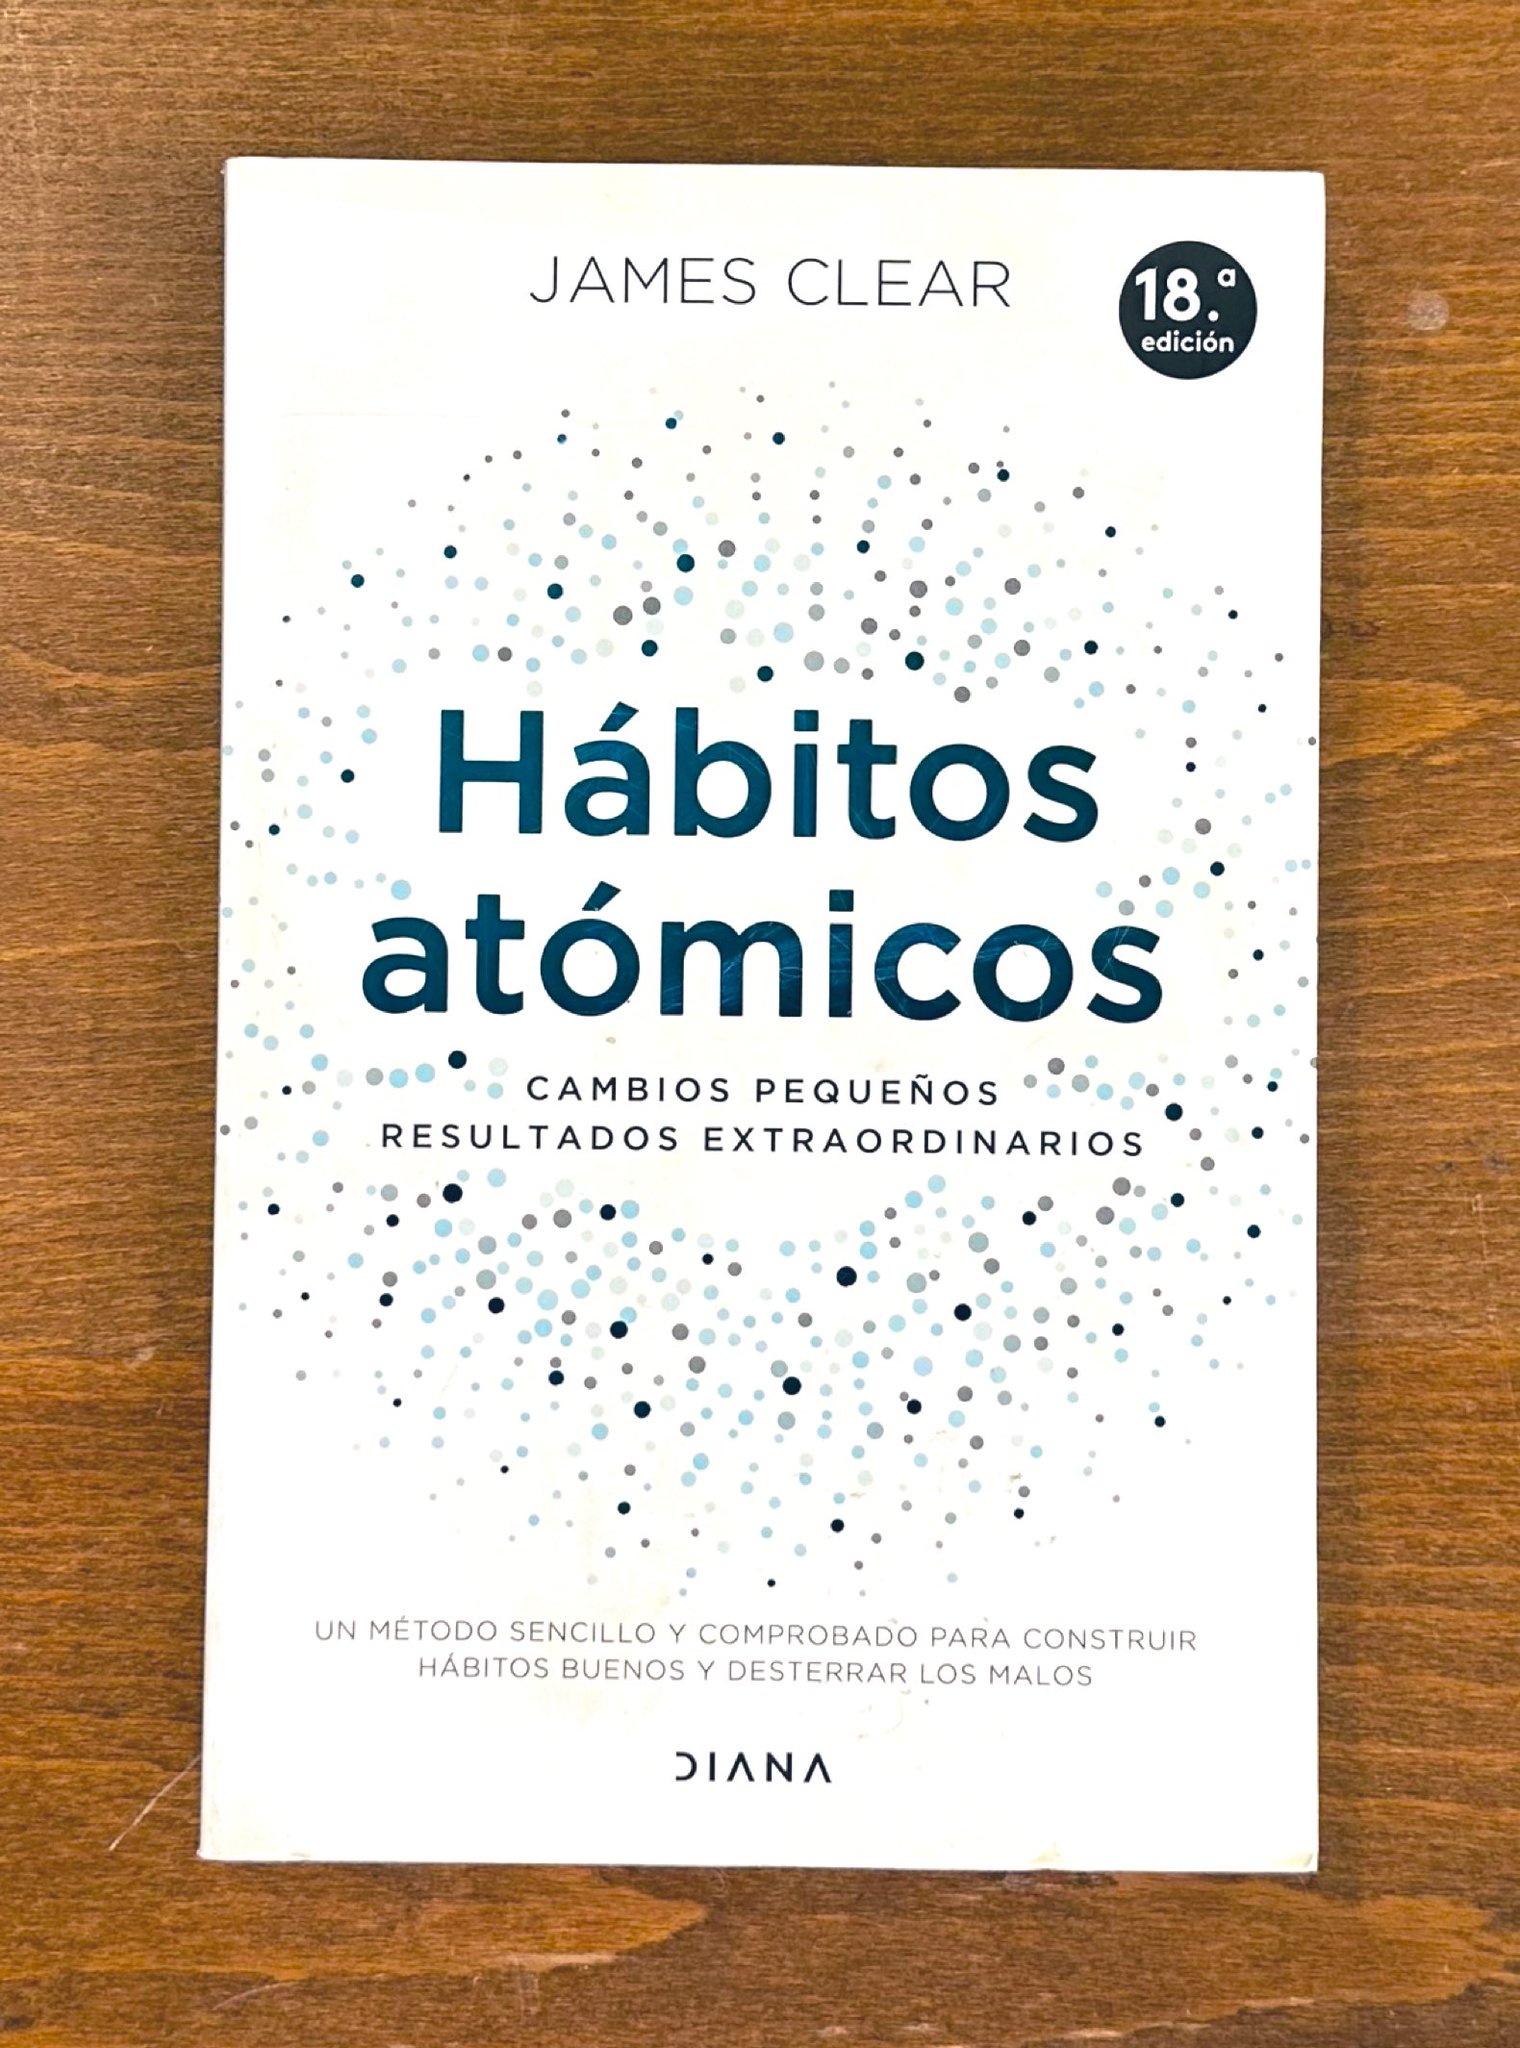 Jorge Chibás on X: 10 ✨ poderosas reflexiones del libro: Hábitos atómicos.   / X